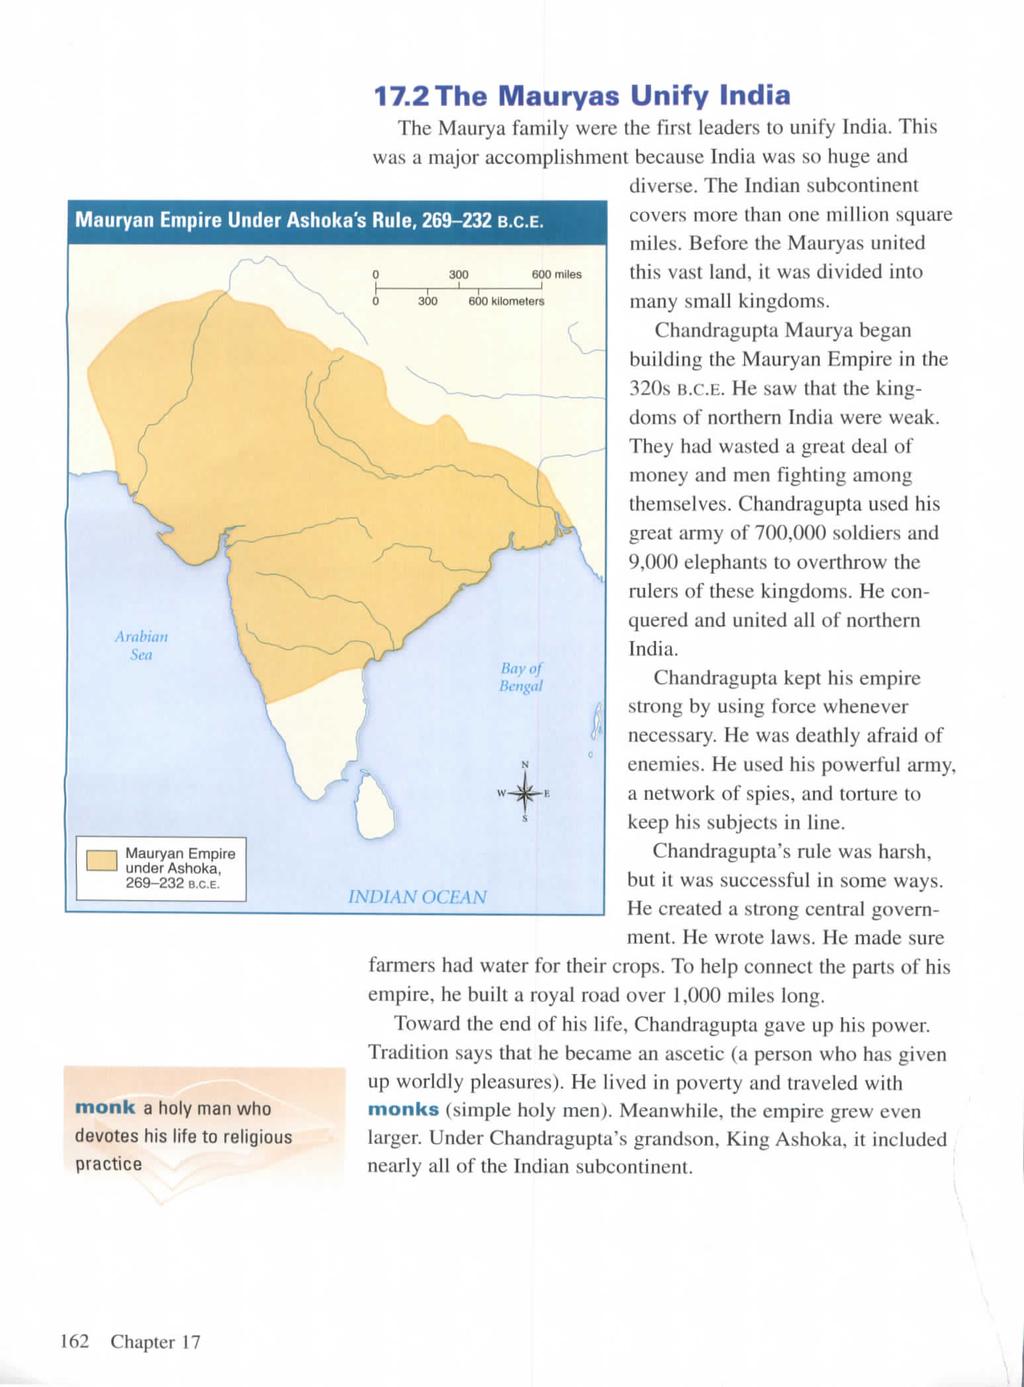 Mauryan Empire Under Ashoka's Rule, 269-232 B.C.E. Mauryan Empire underashoka, 269-232 B.C.E. monk a holy man who devotes his life to religious practice 17.